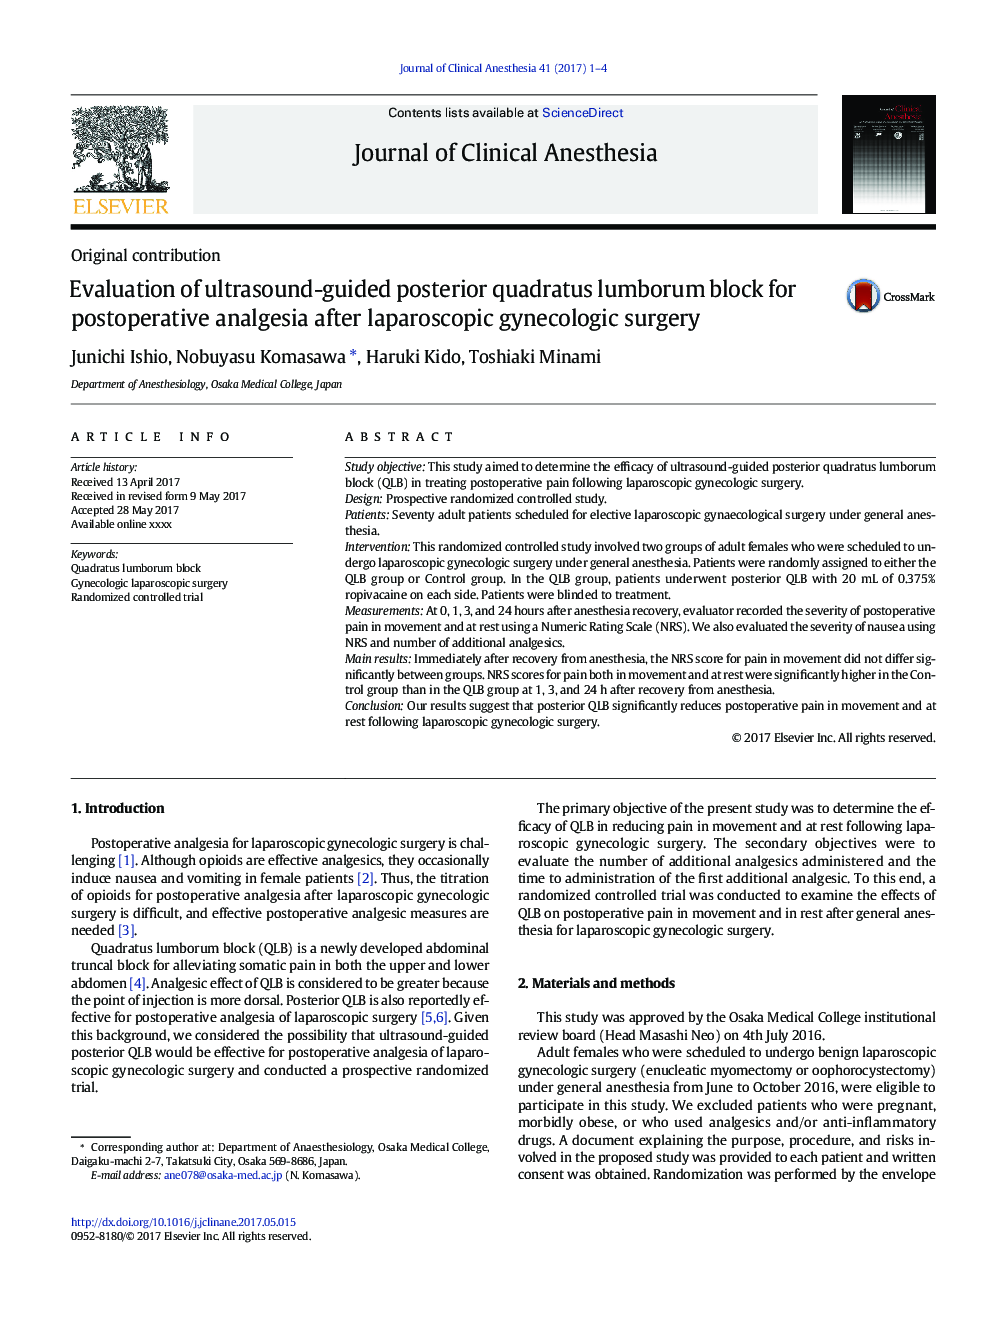 Evaluation of ultrasound-guided posterior quadratus lumborum block for postoperative analgesia after laparoscopic gynecologic surgery